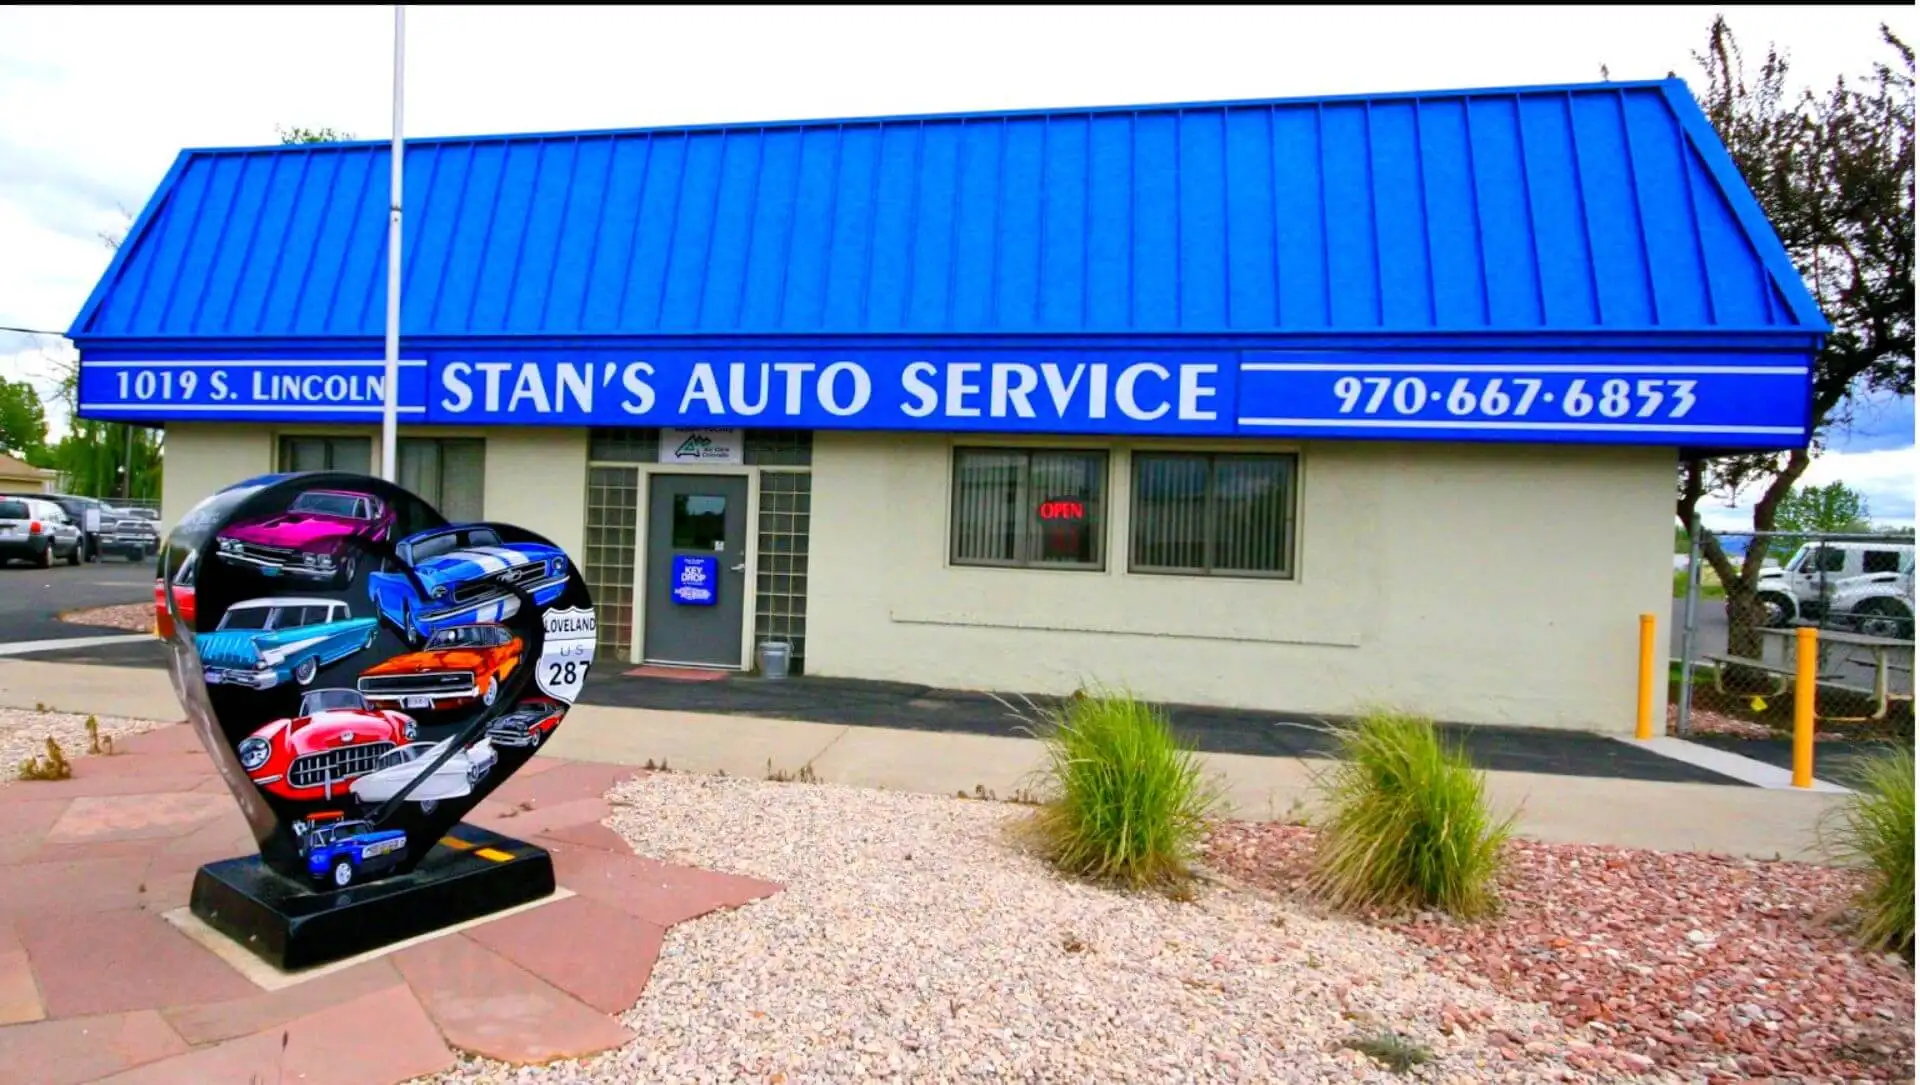 Stan's Auto Service: Mechanic in Loveland, CO